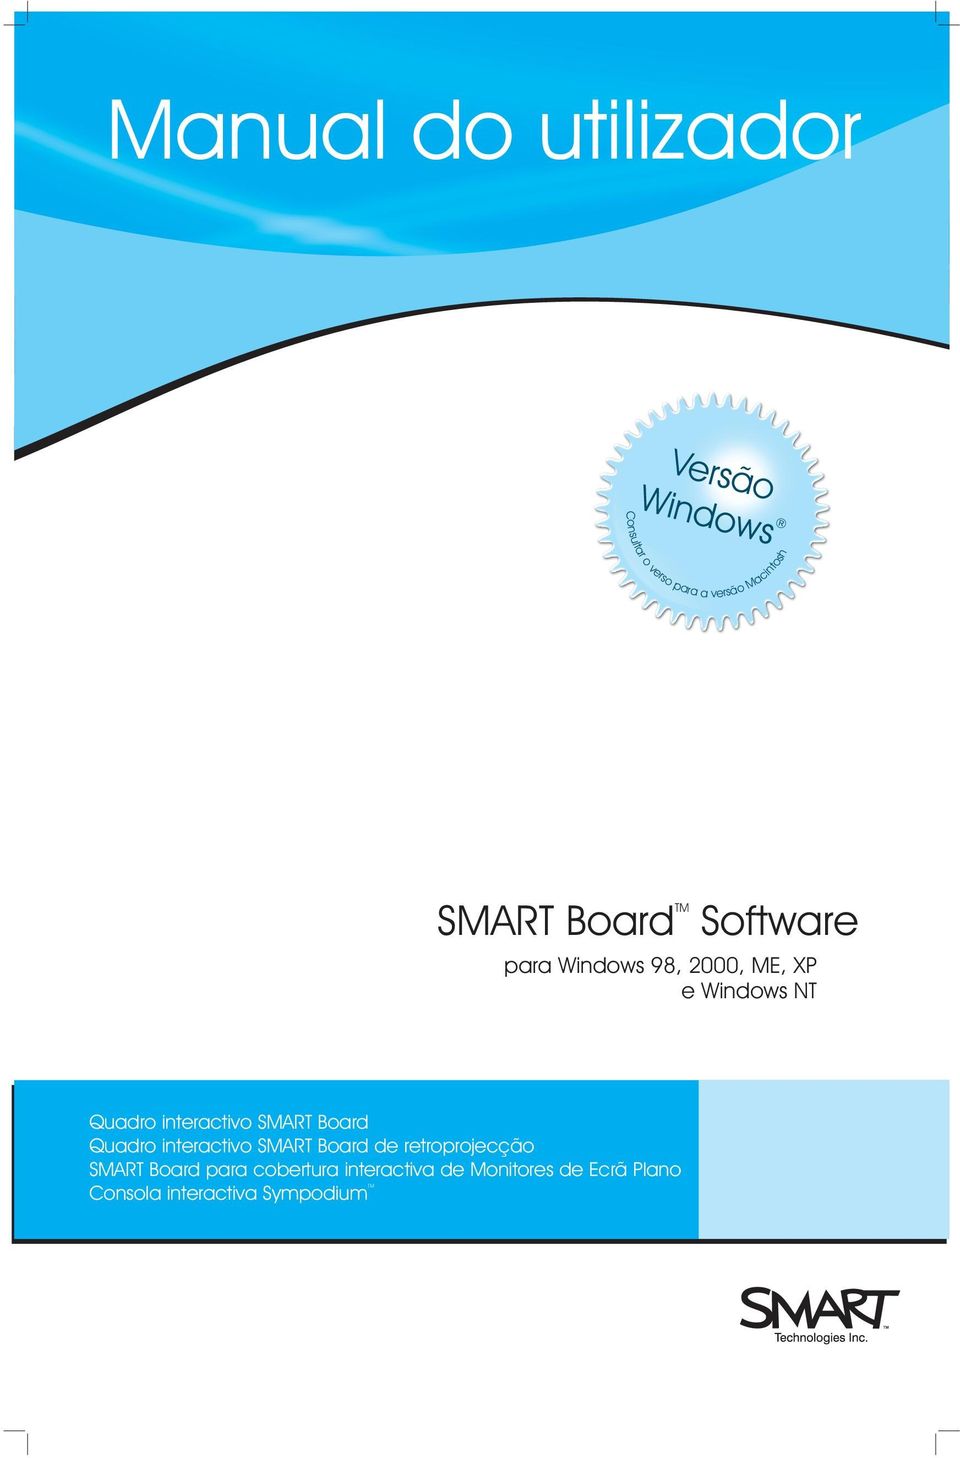 interactivo SMART Board Quadro interactivo SMART Board de retroprojecção SMART